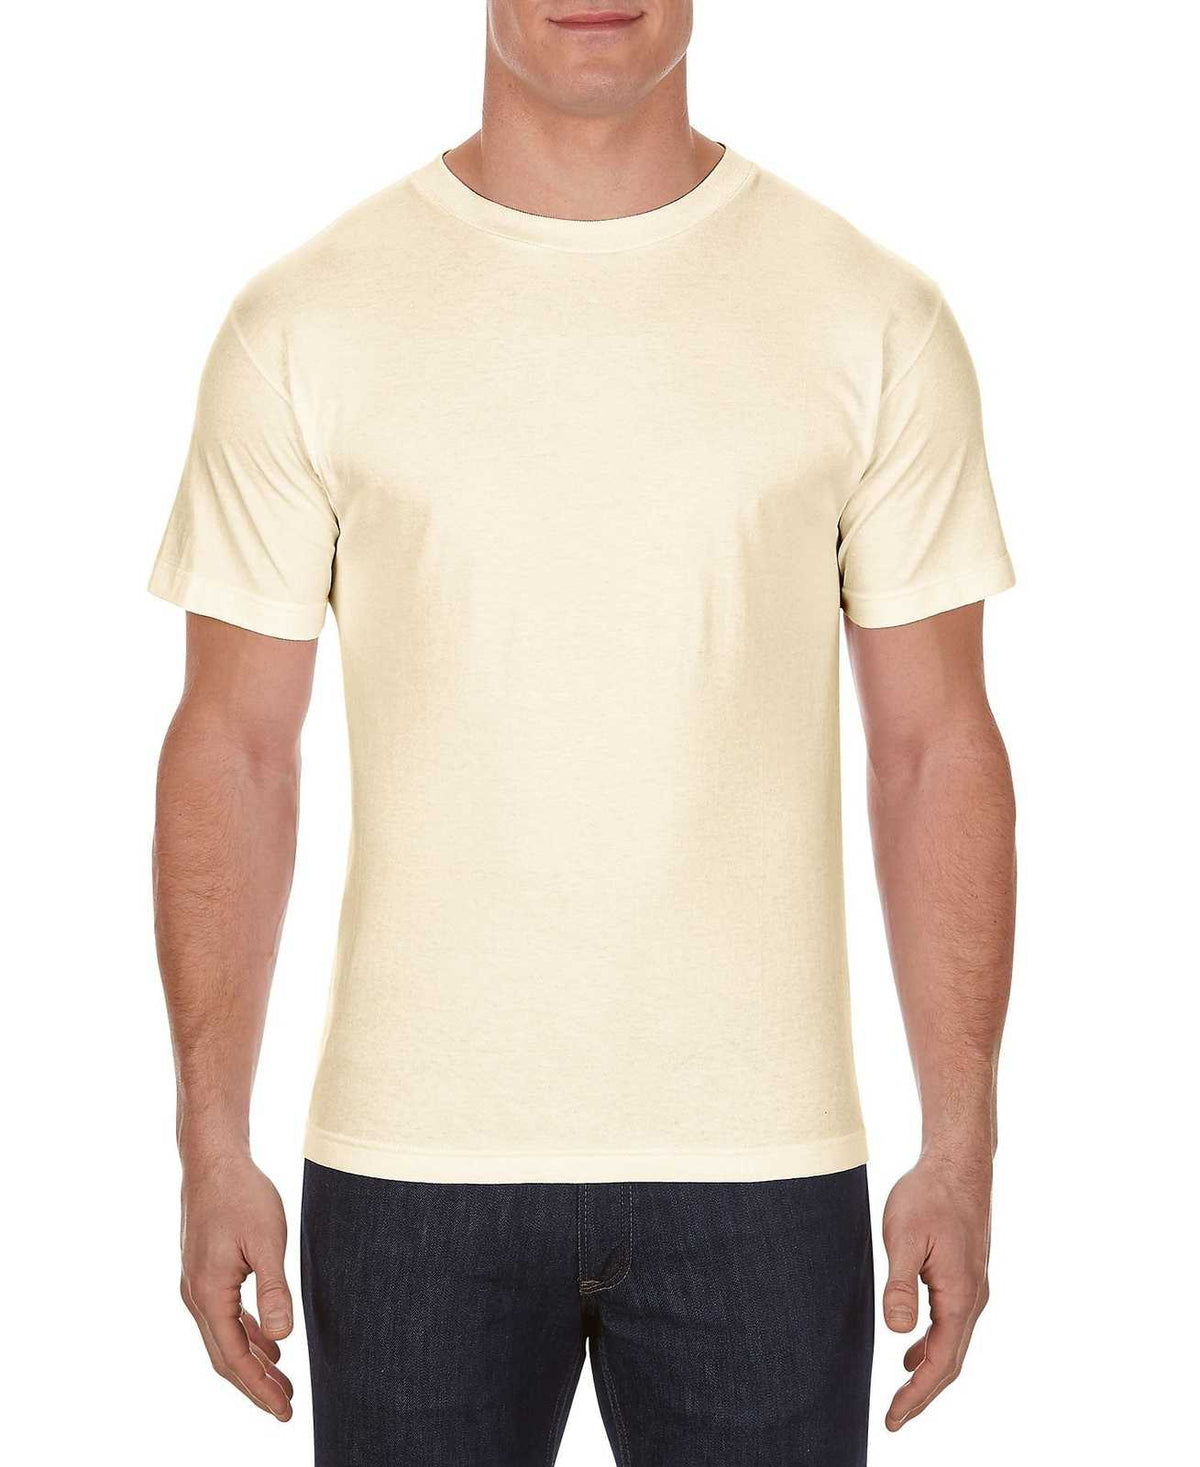 American Apparel 1301 Unisex Heavyweight Cotton T-Shirt - Cream - HIT a Double